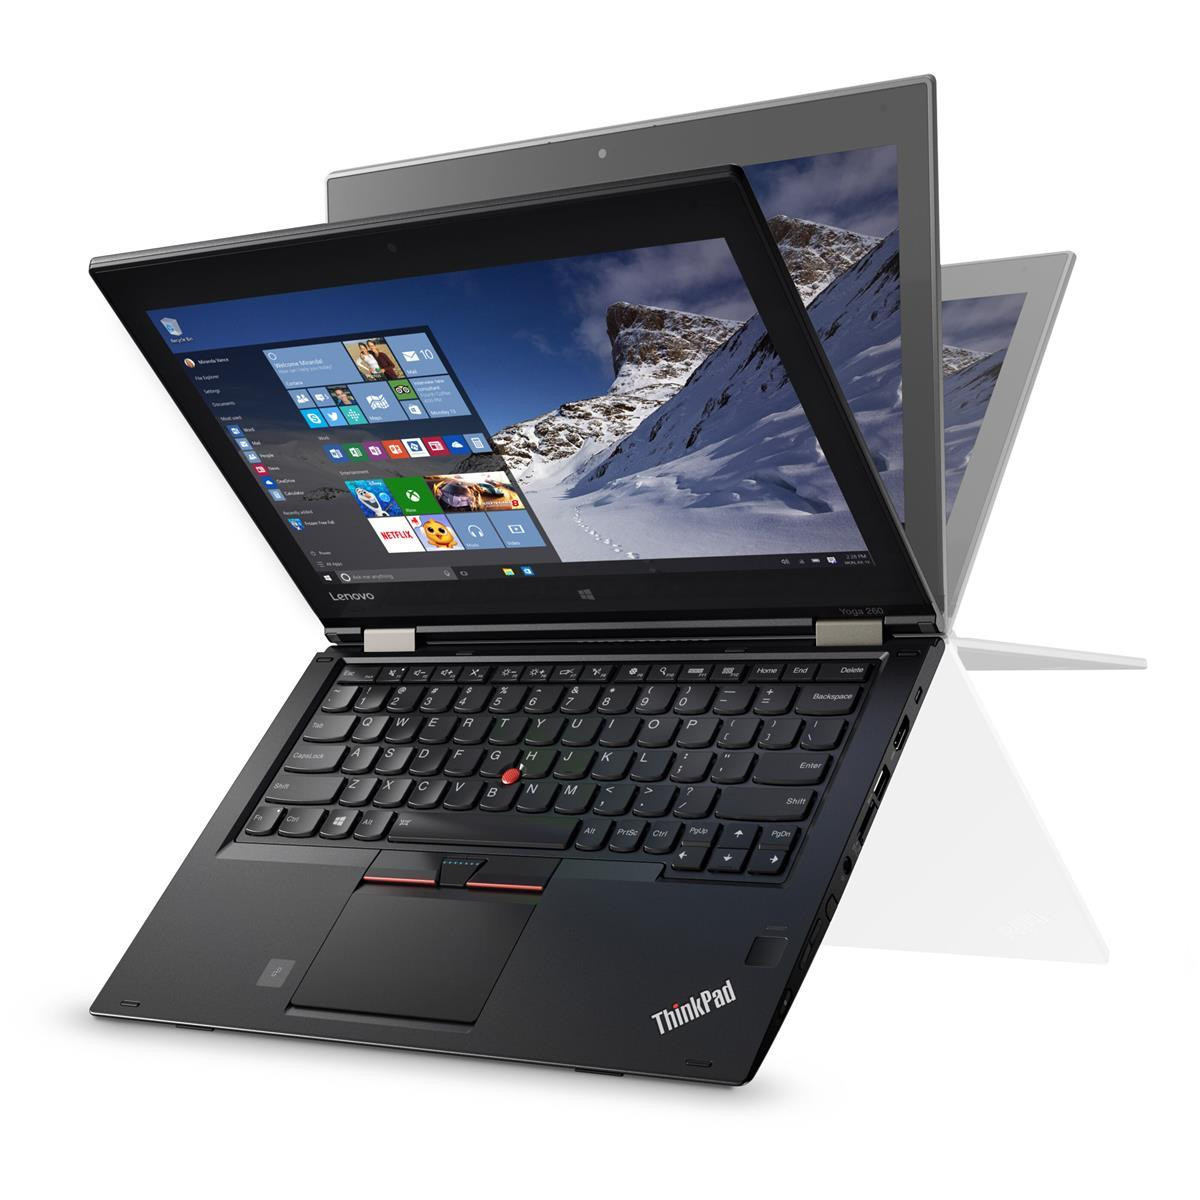 Lenovo ThinkPad Yoga 260 Intel i5-6200U 8GB 256GB SSD FHD W10P WLAN Touchscreen